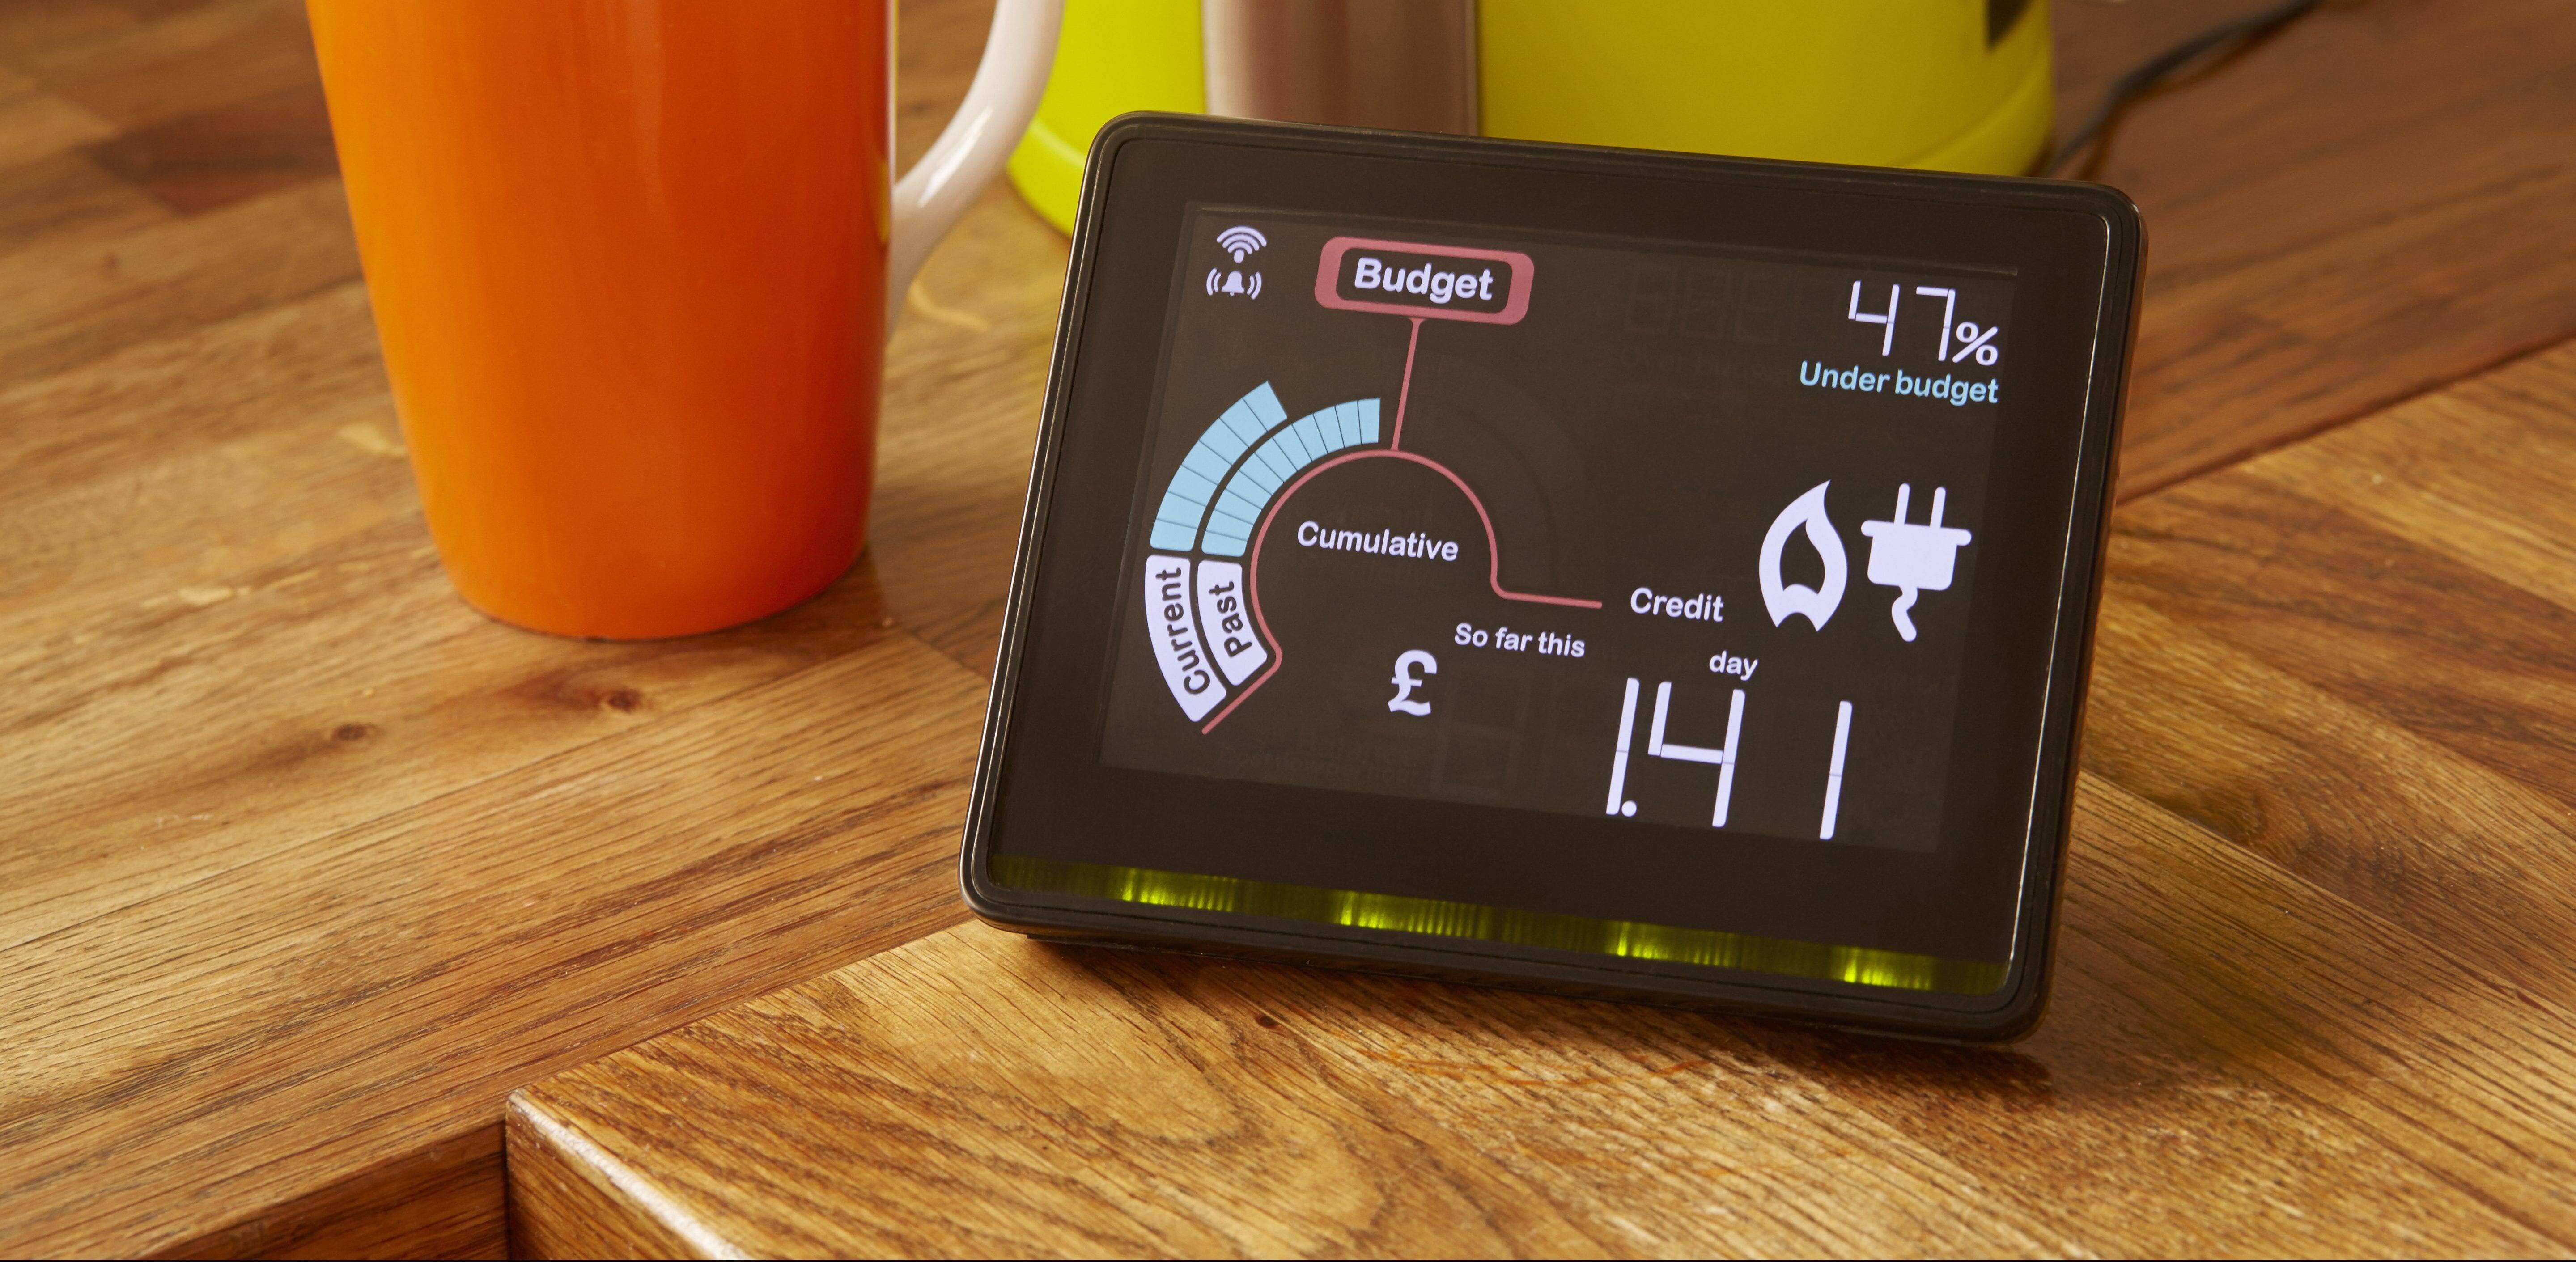 Smart Energy GB agrees to reword smart meter advertising